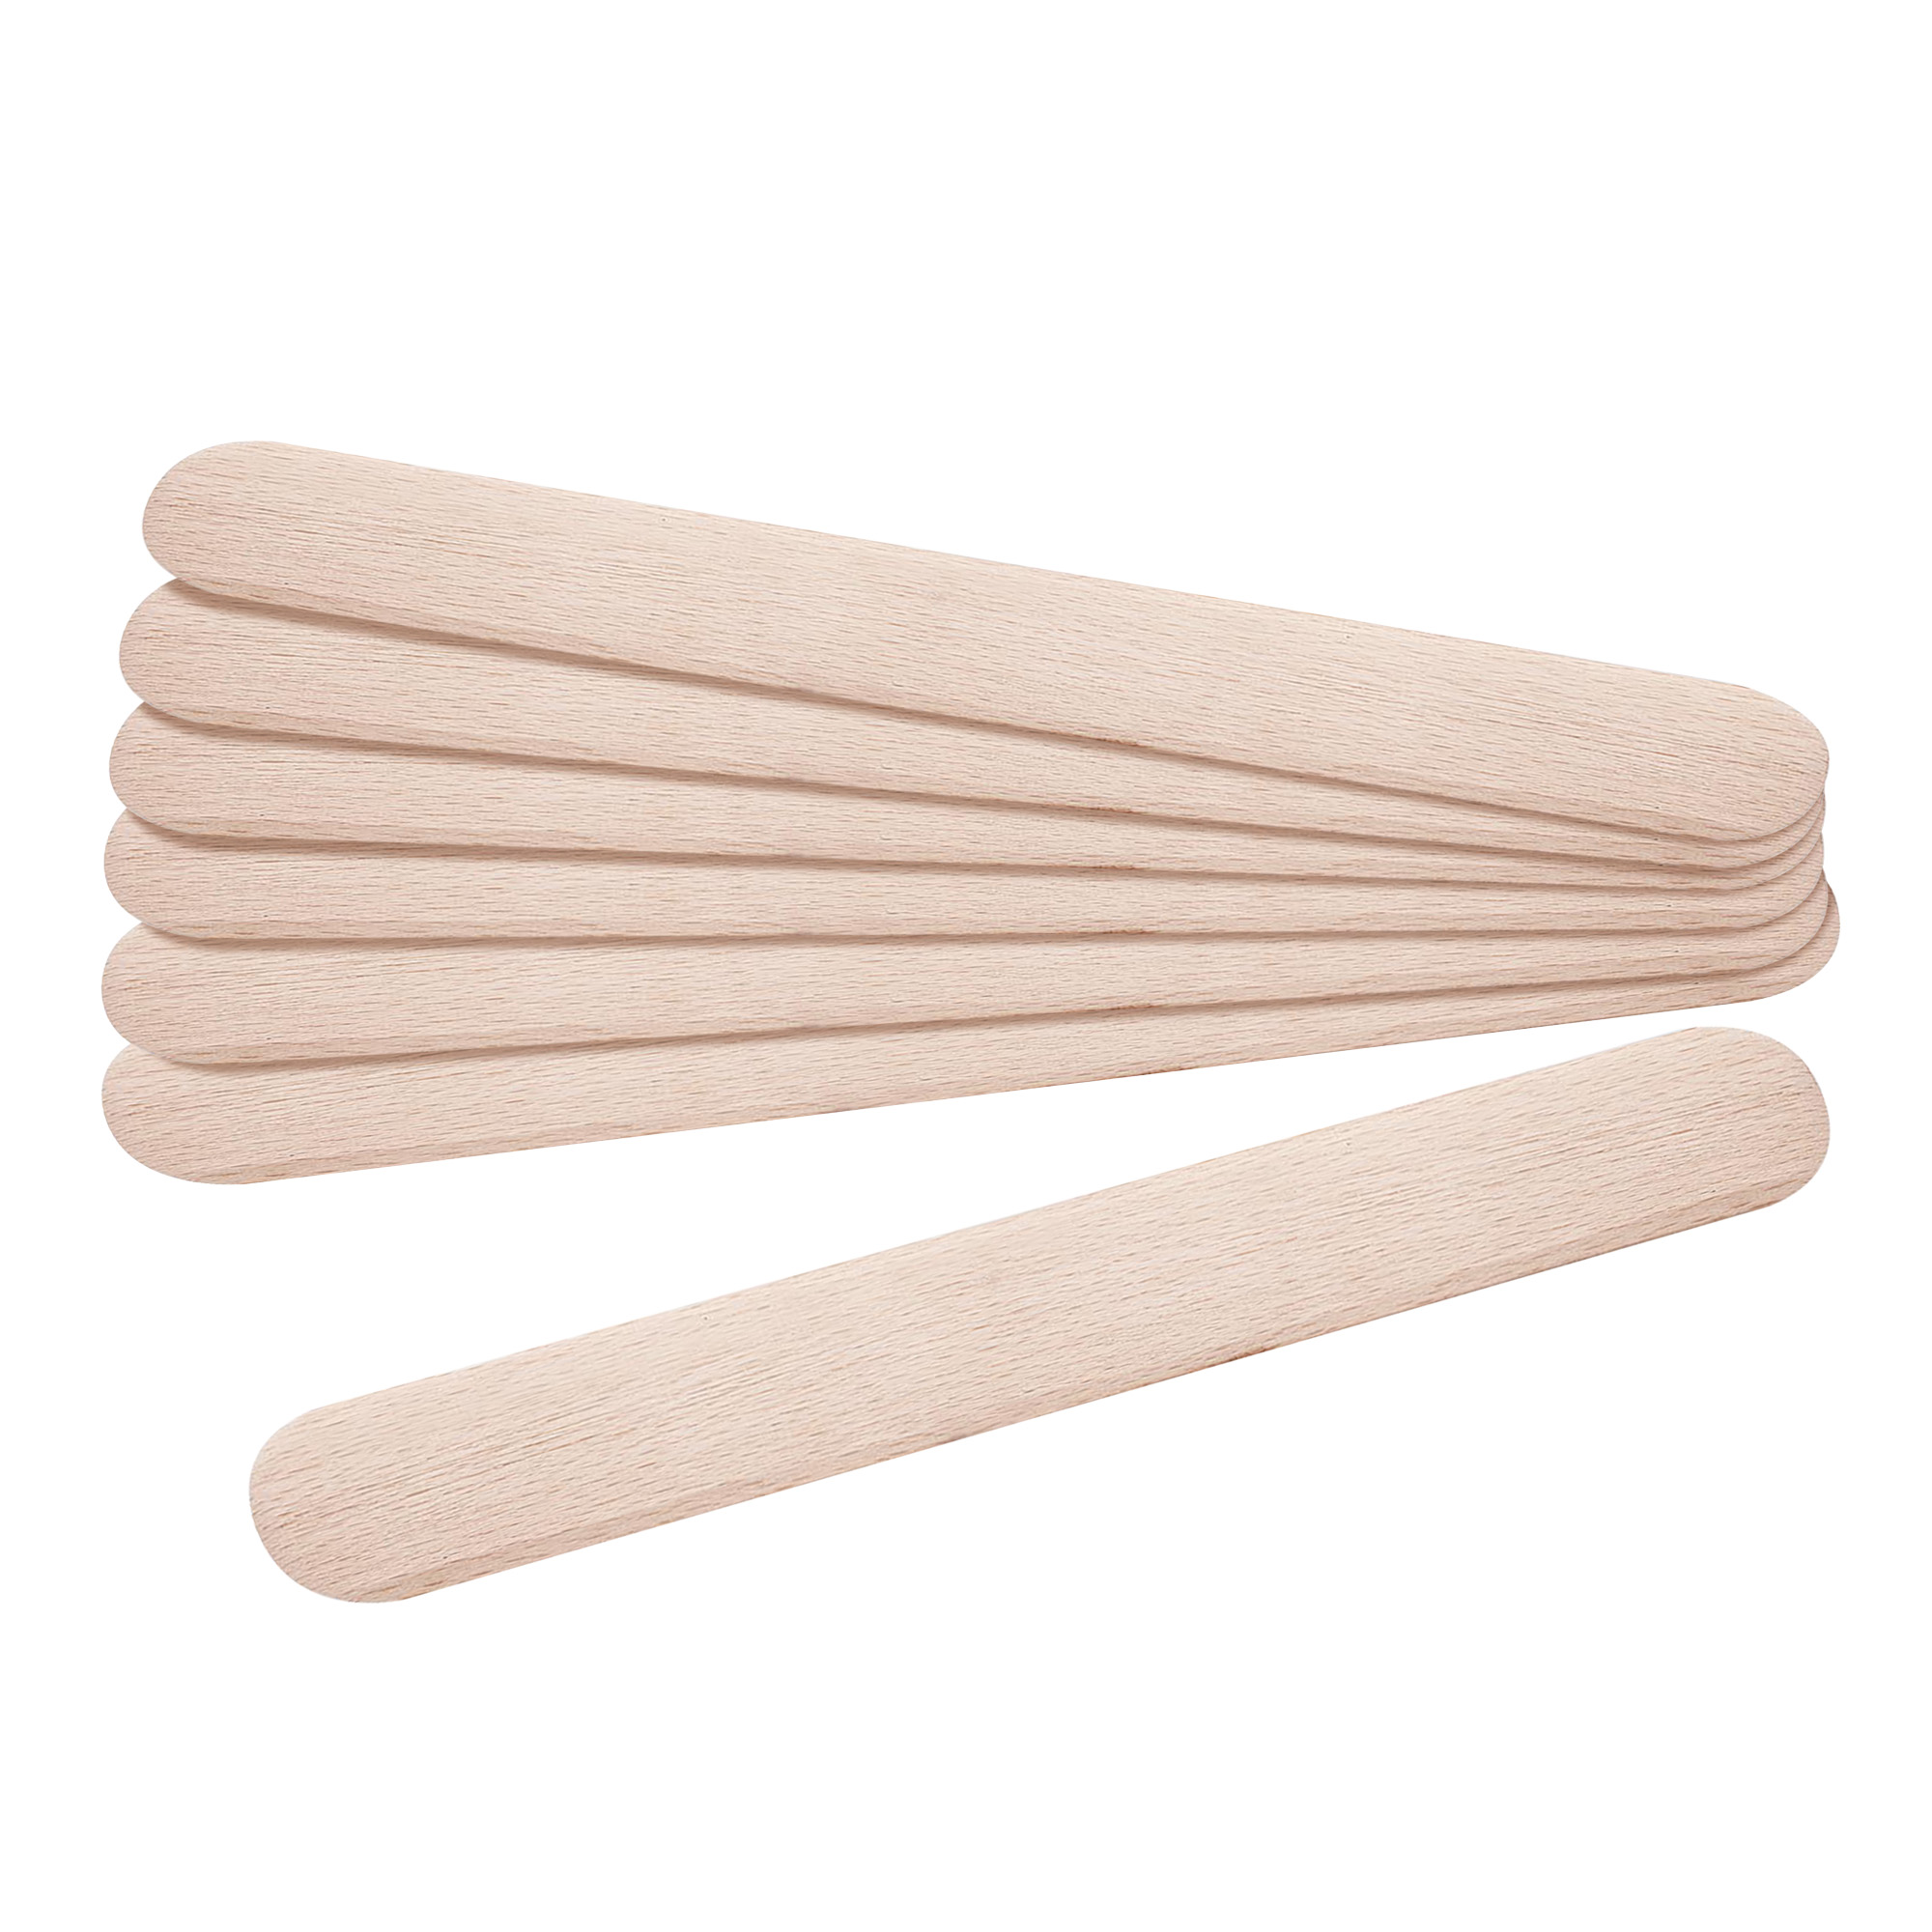 Disposable wooden spatulas for sensitive areas 50 pcs